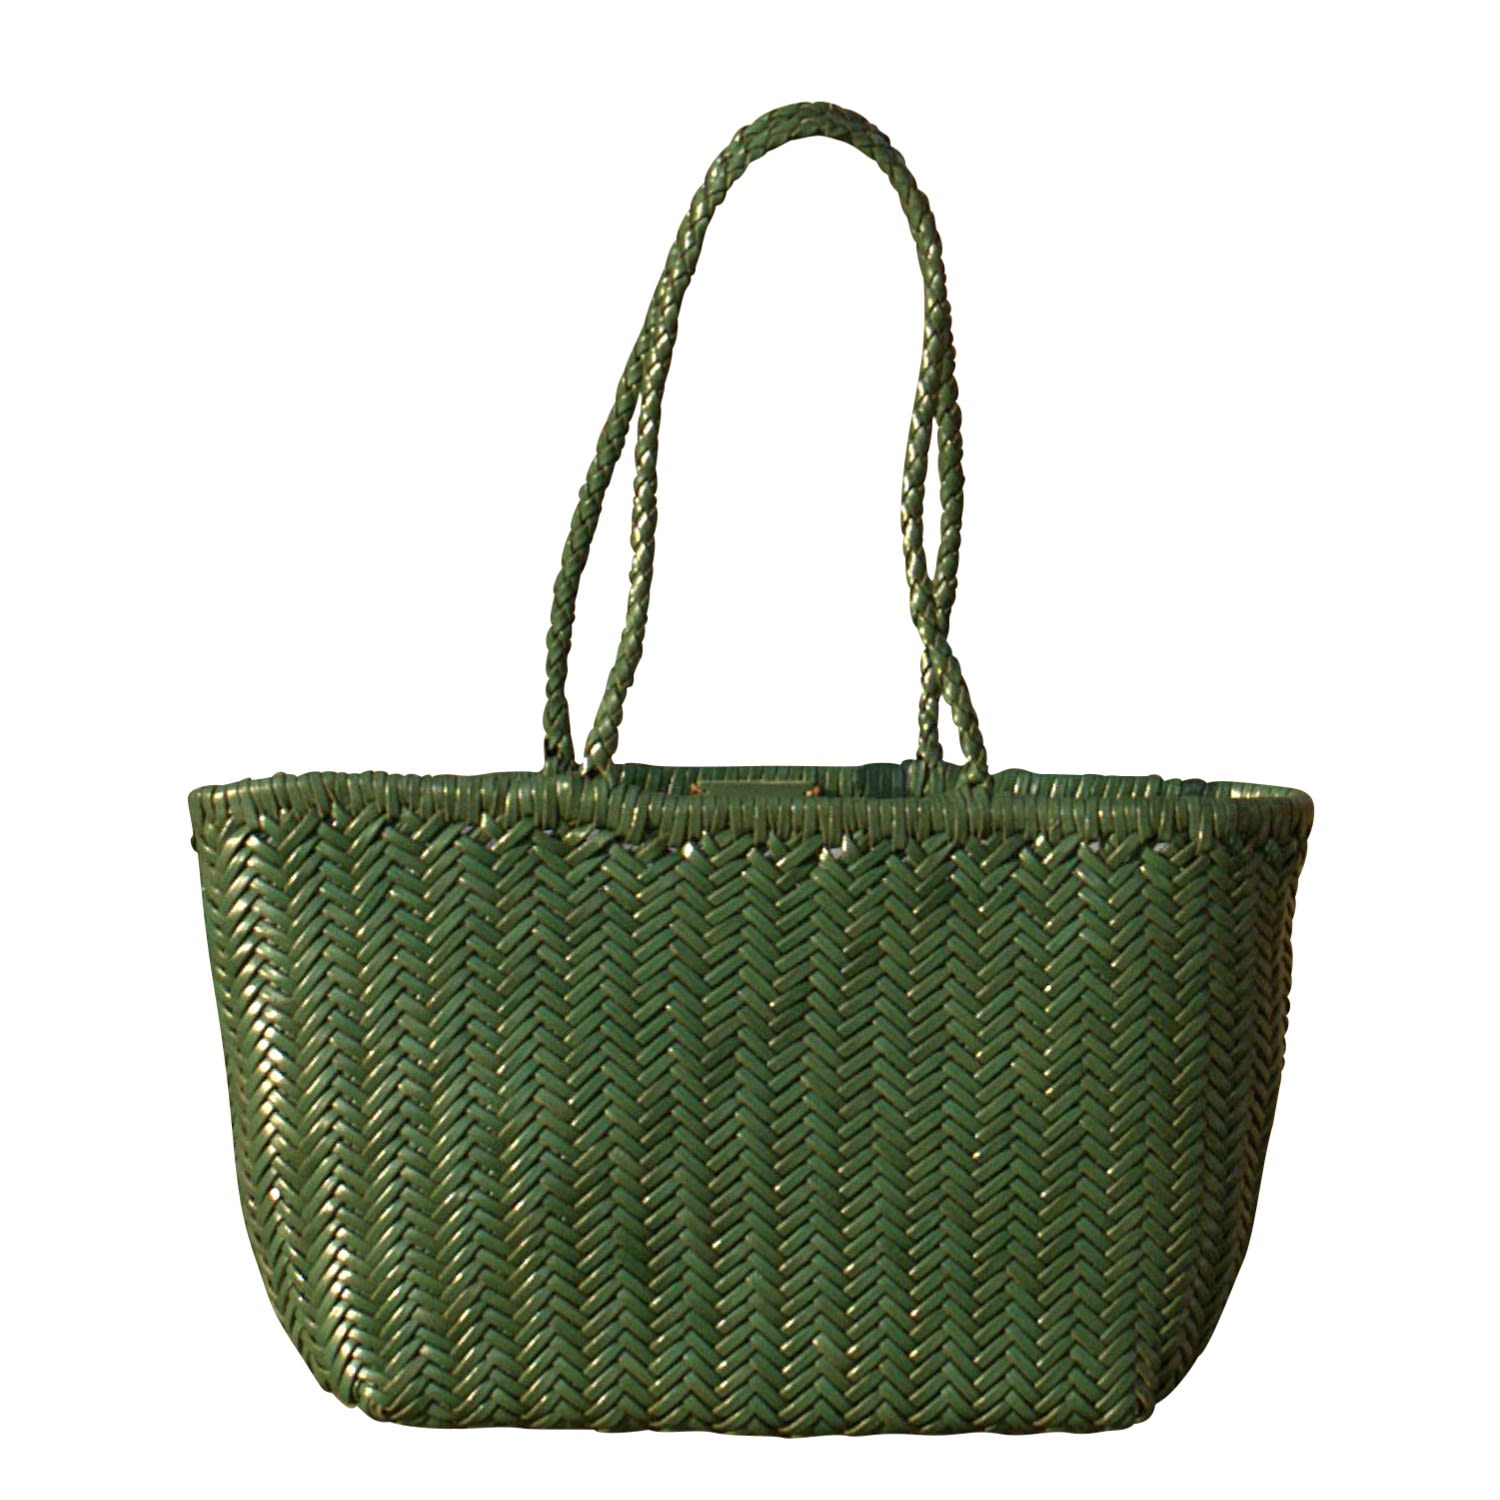 Zigzag Woven Leather Handbag ’Viviana’ Large Size - Green Rimini